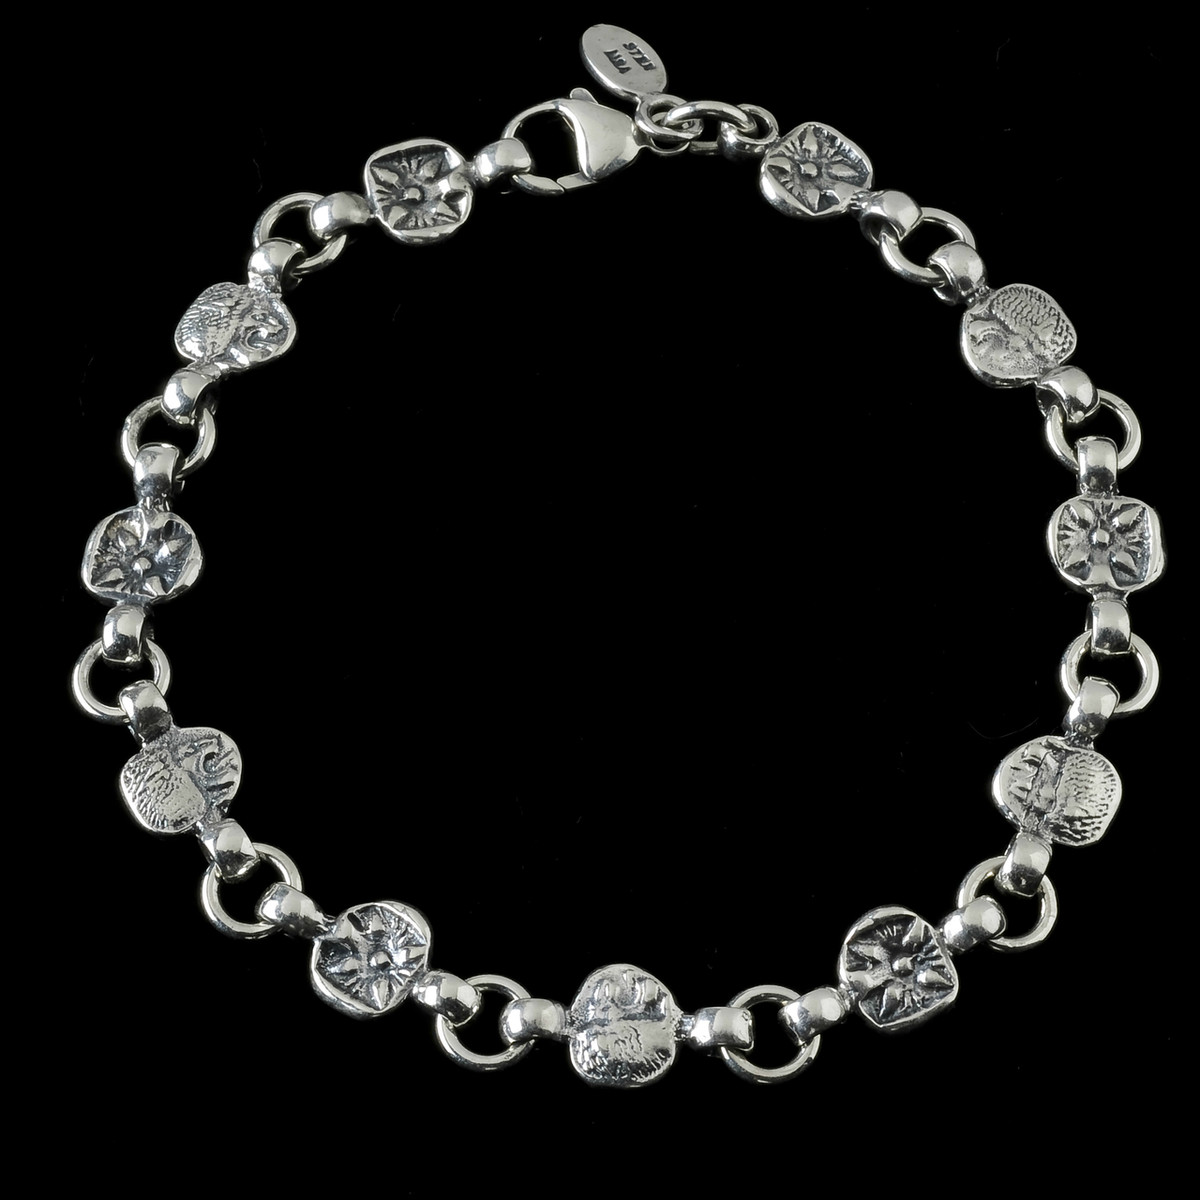 Lion Silver Cuff Bracelet | Boutique Ottoman Jewelry Store